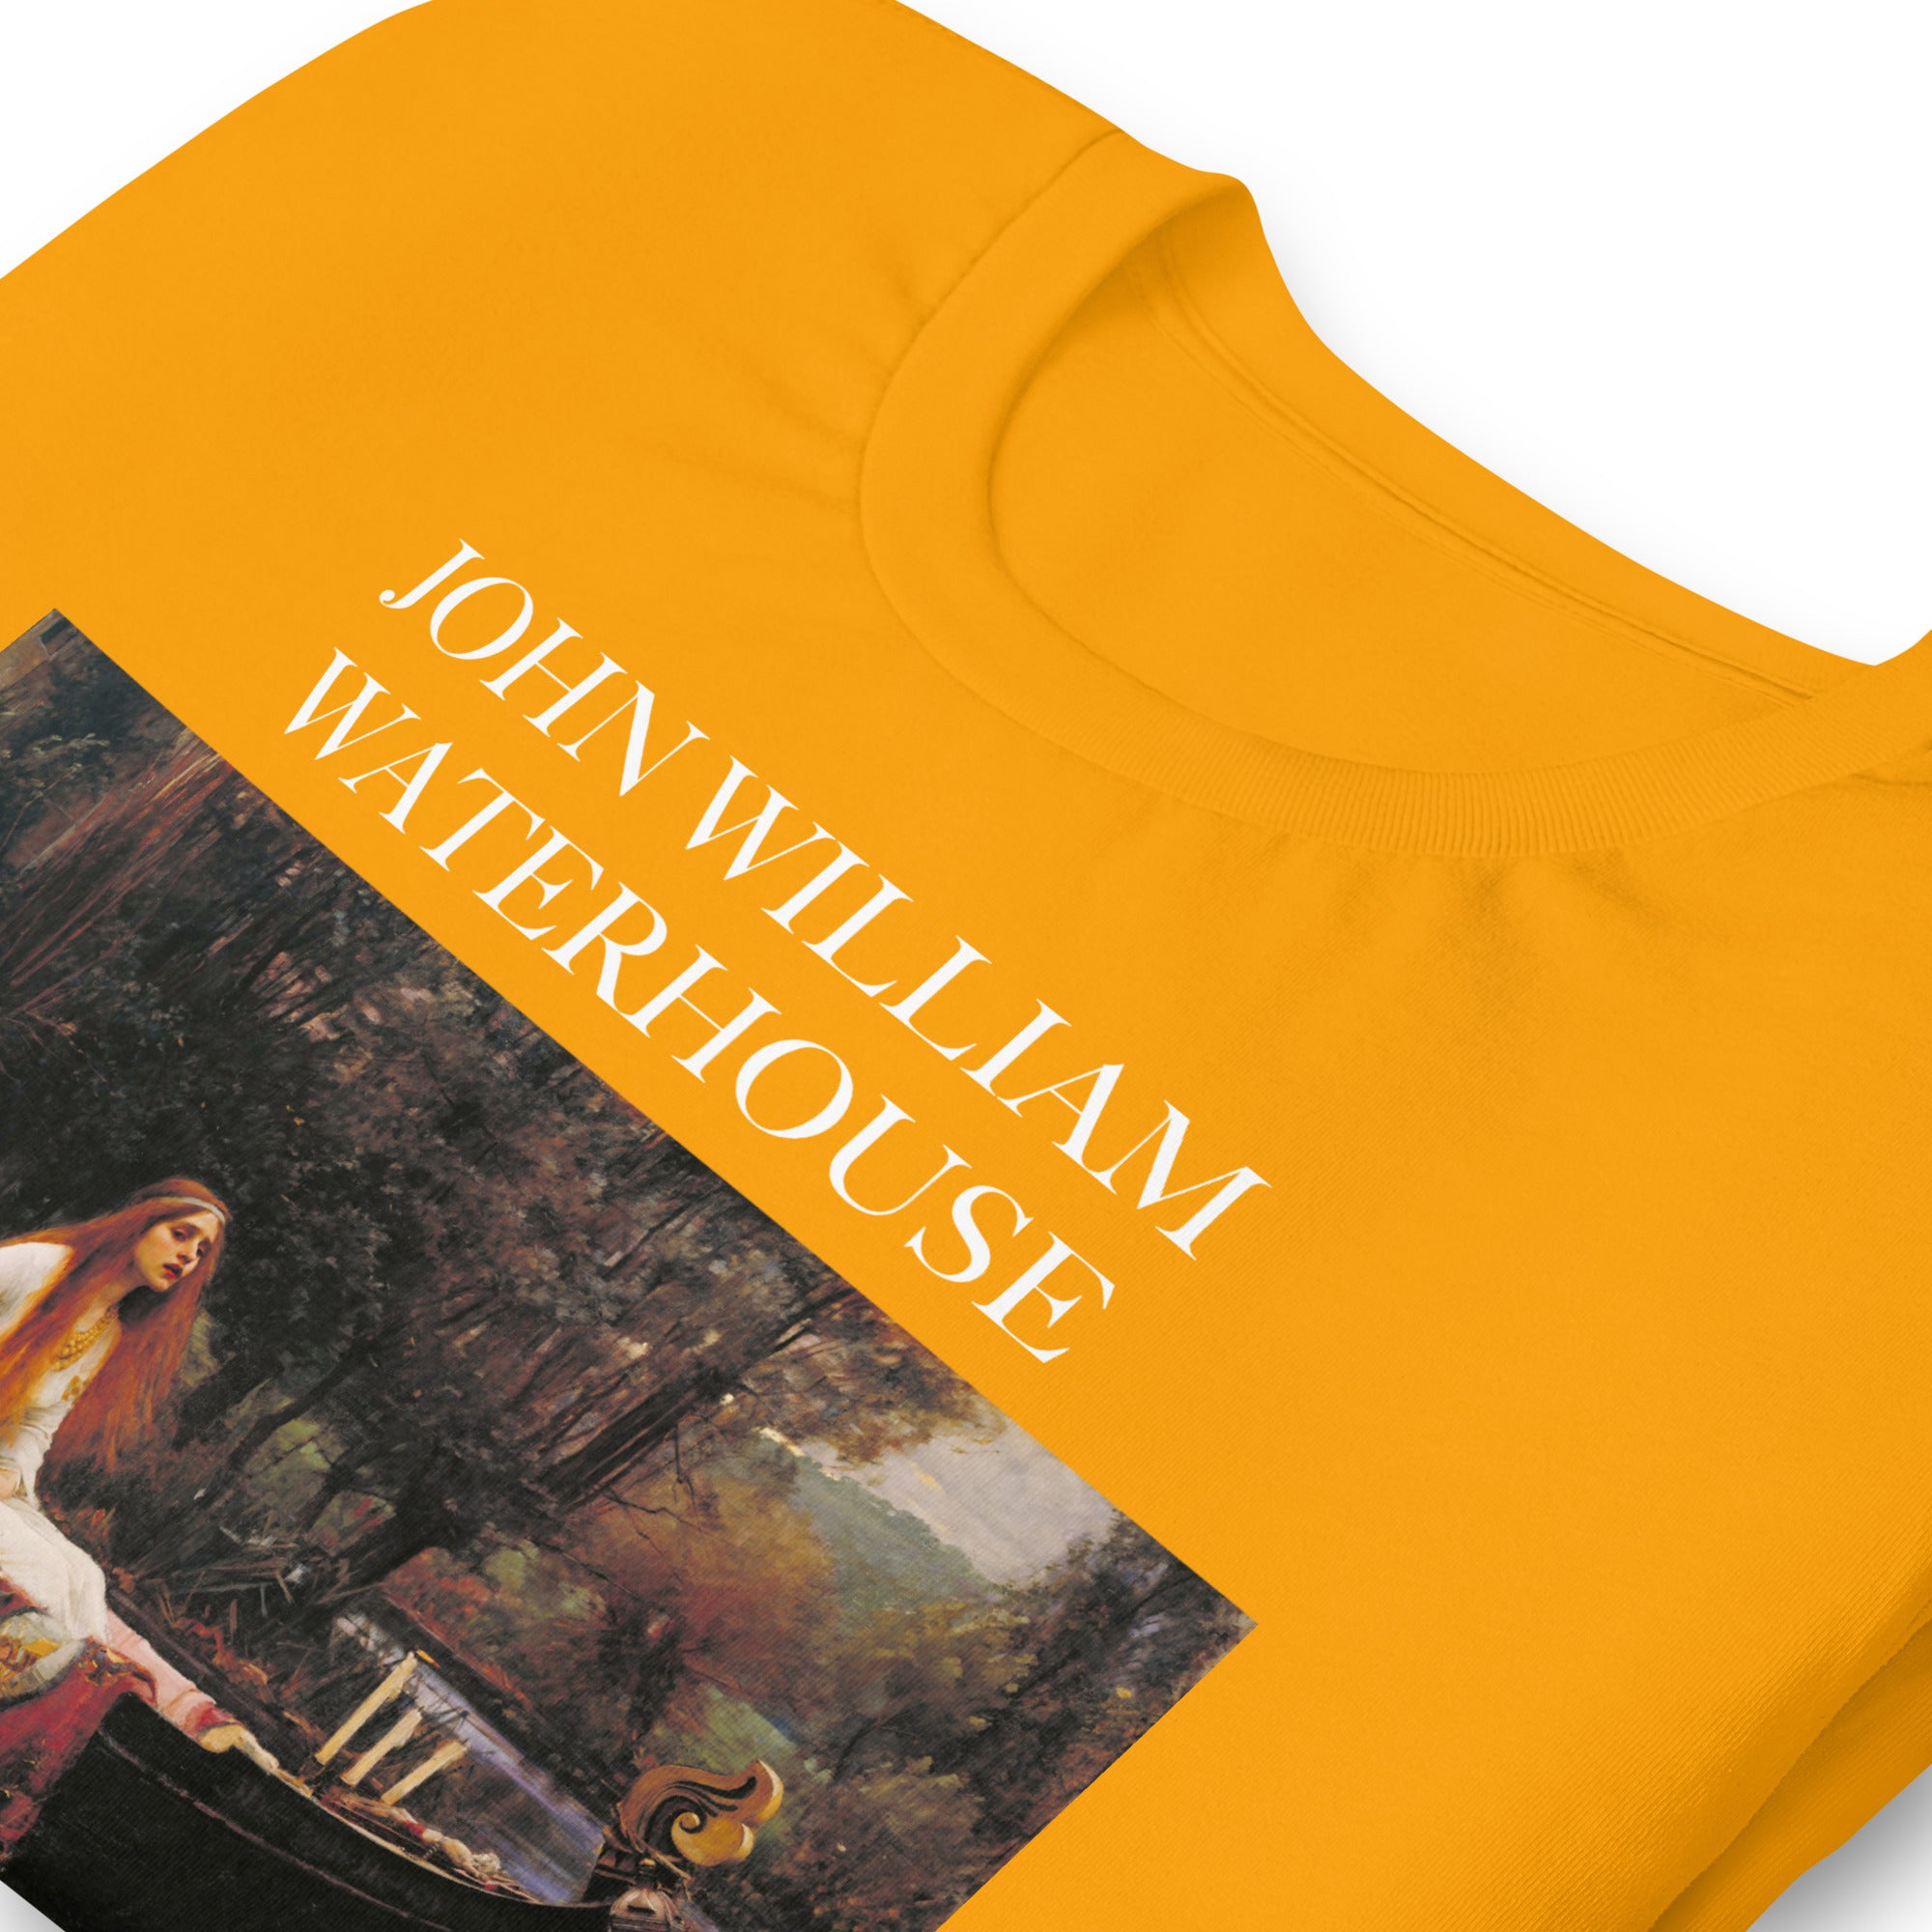 John William Waterhouse 'The Lady of Shalott' Famous Painting T-Shirt | Unisex Classic Art Tee